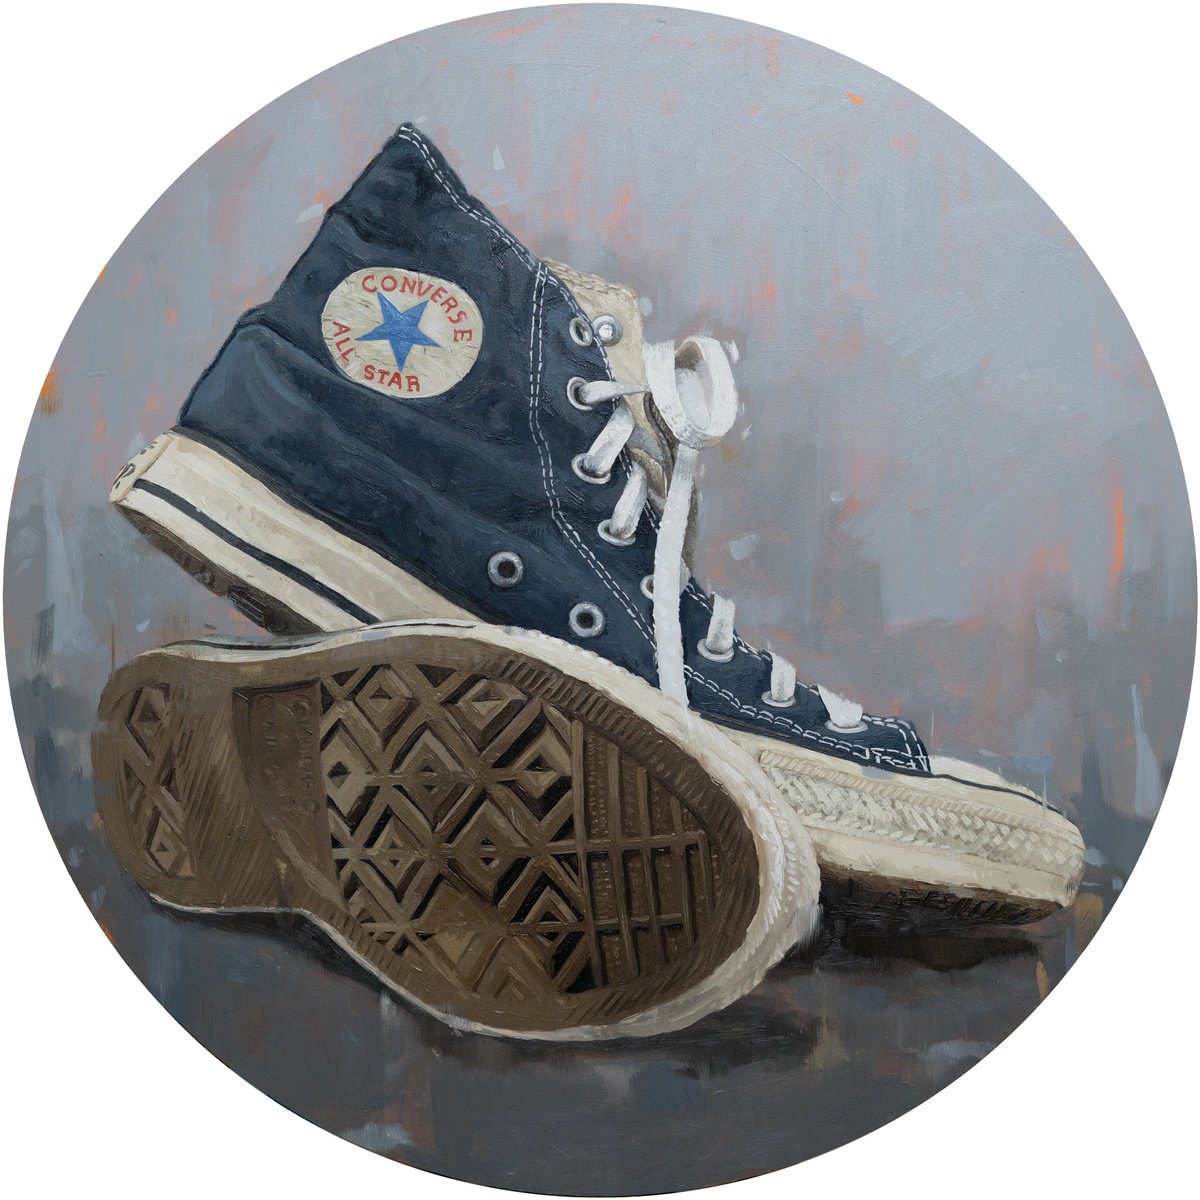 Blue converse ’chucks’ by Oliver Winconek